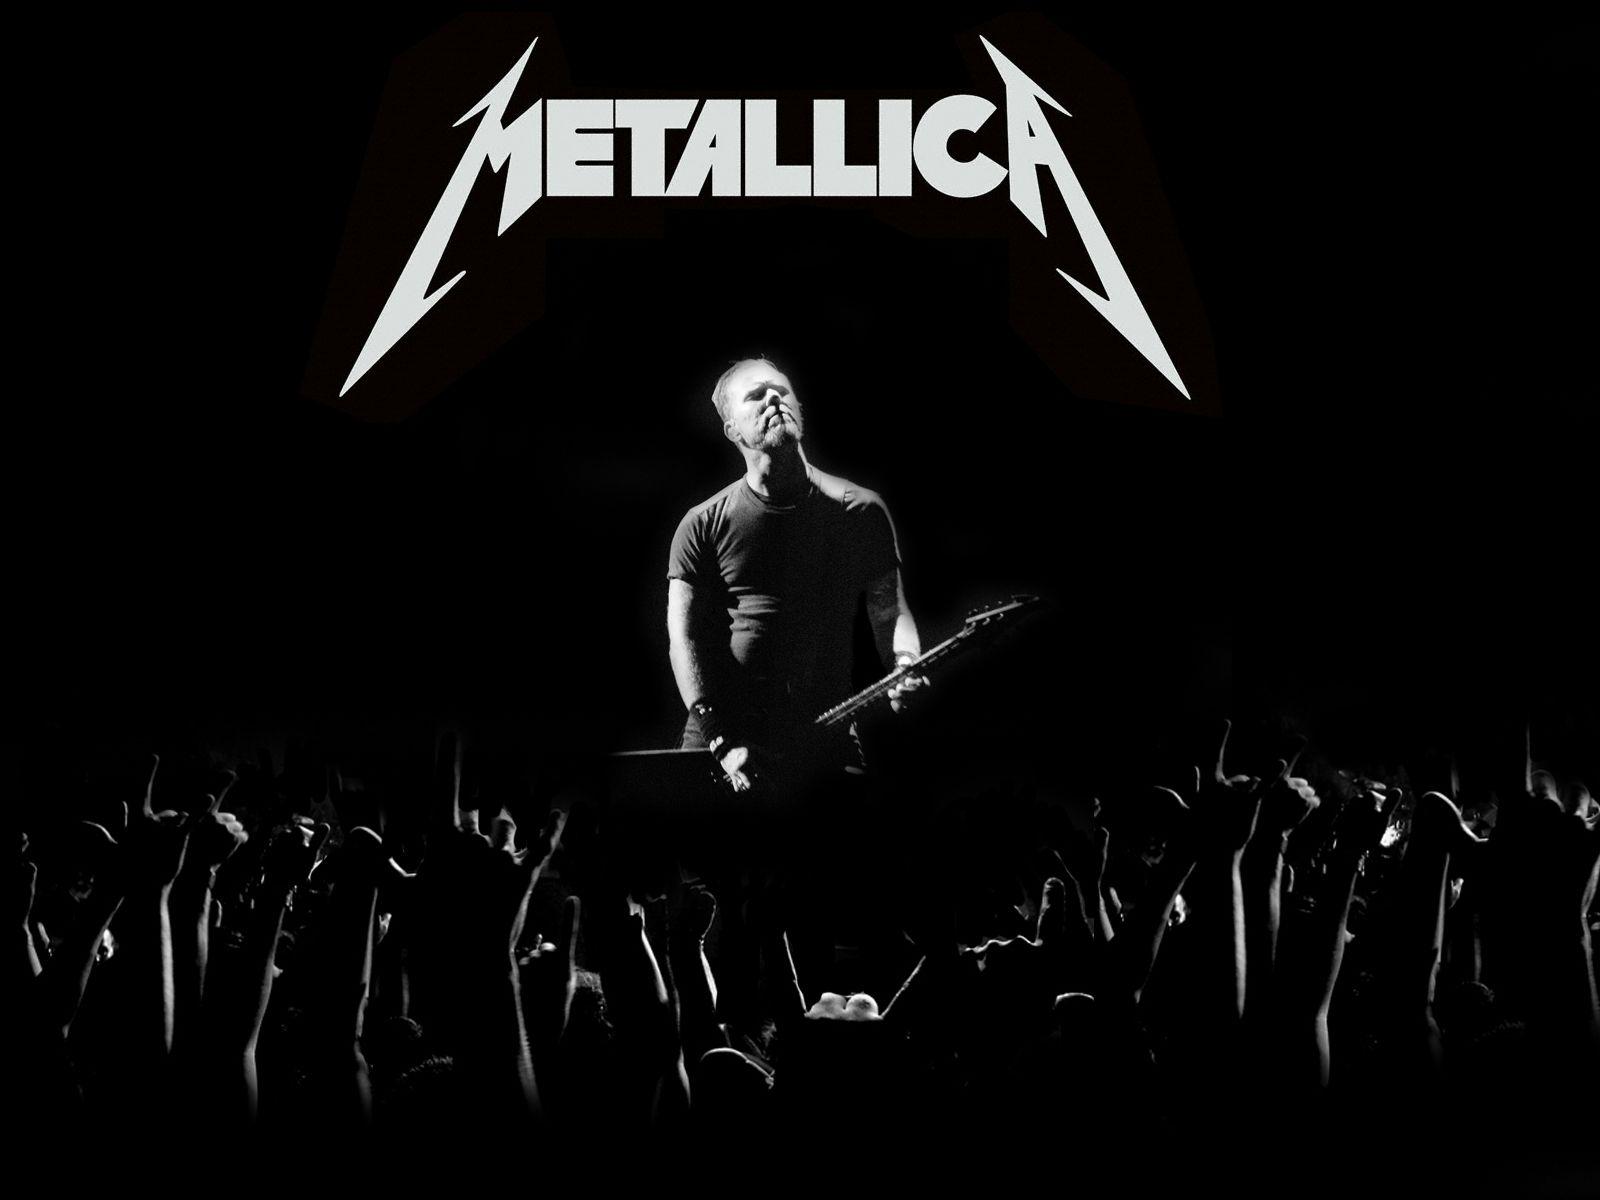 Wallpaper For > Metallica Wallpaper Black Album